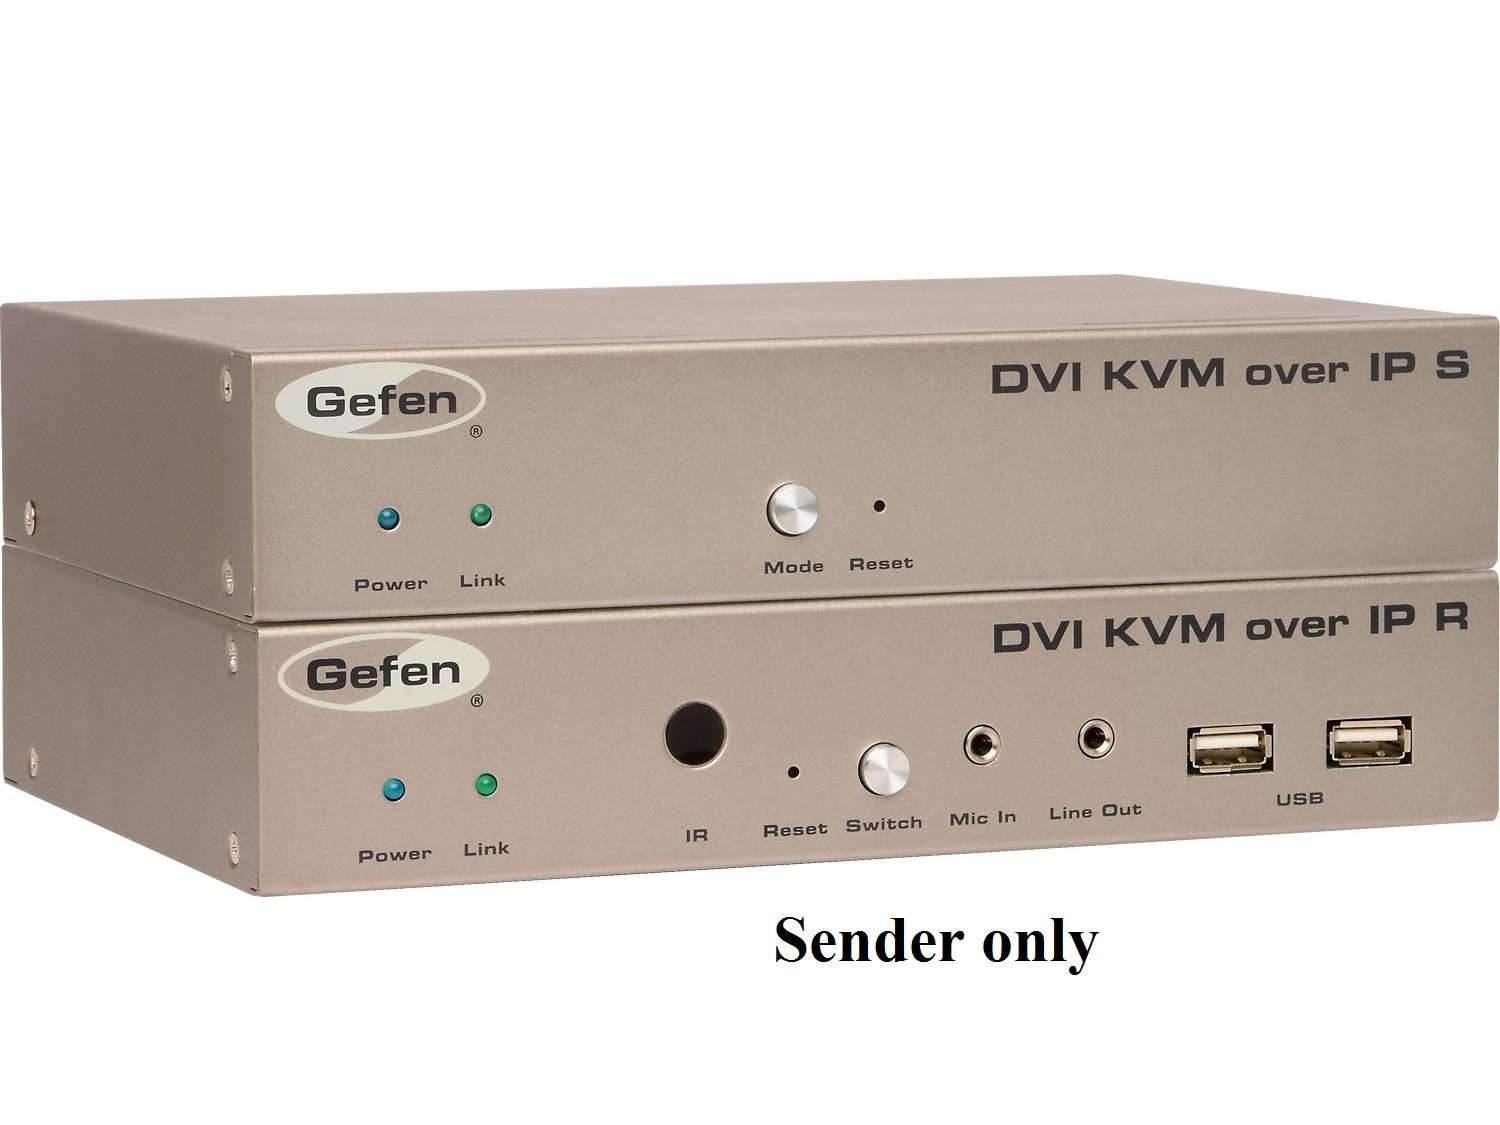 EXT-DVIKVM-LANTX DVI KVM over IP Extender (Transmitter) by Gefen